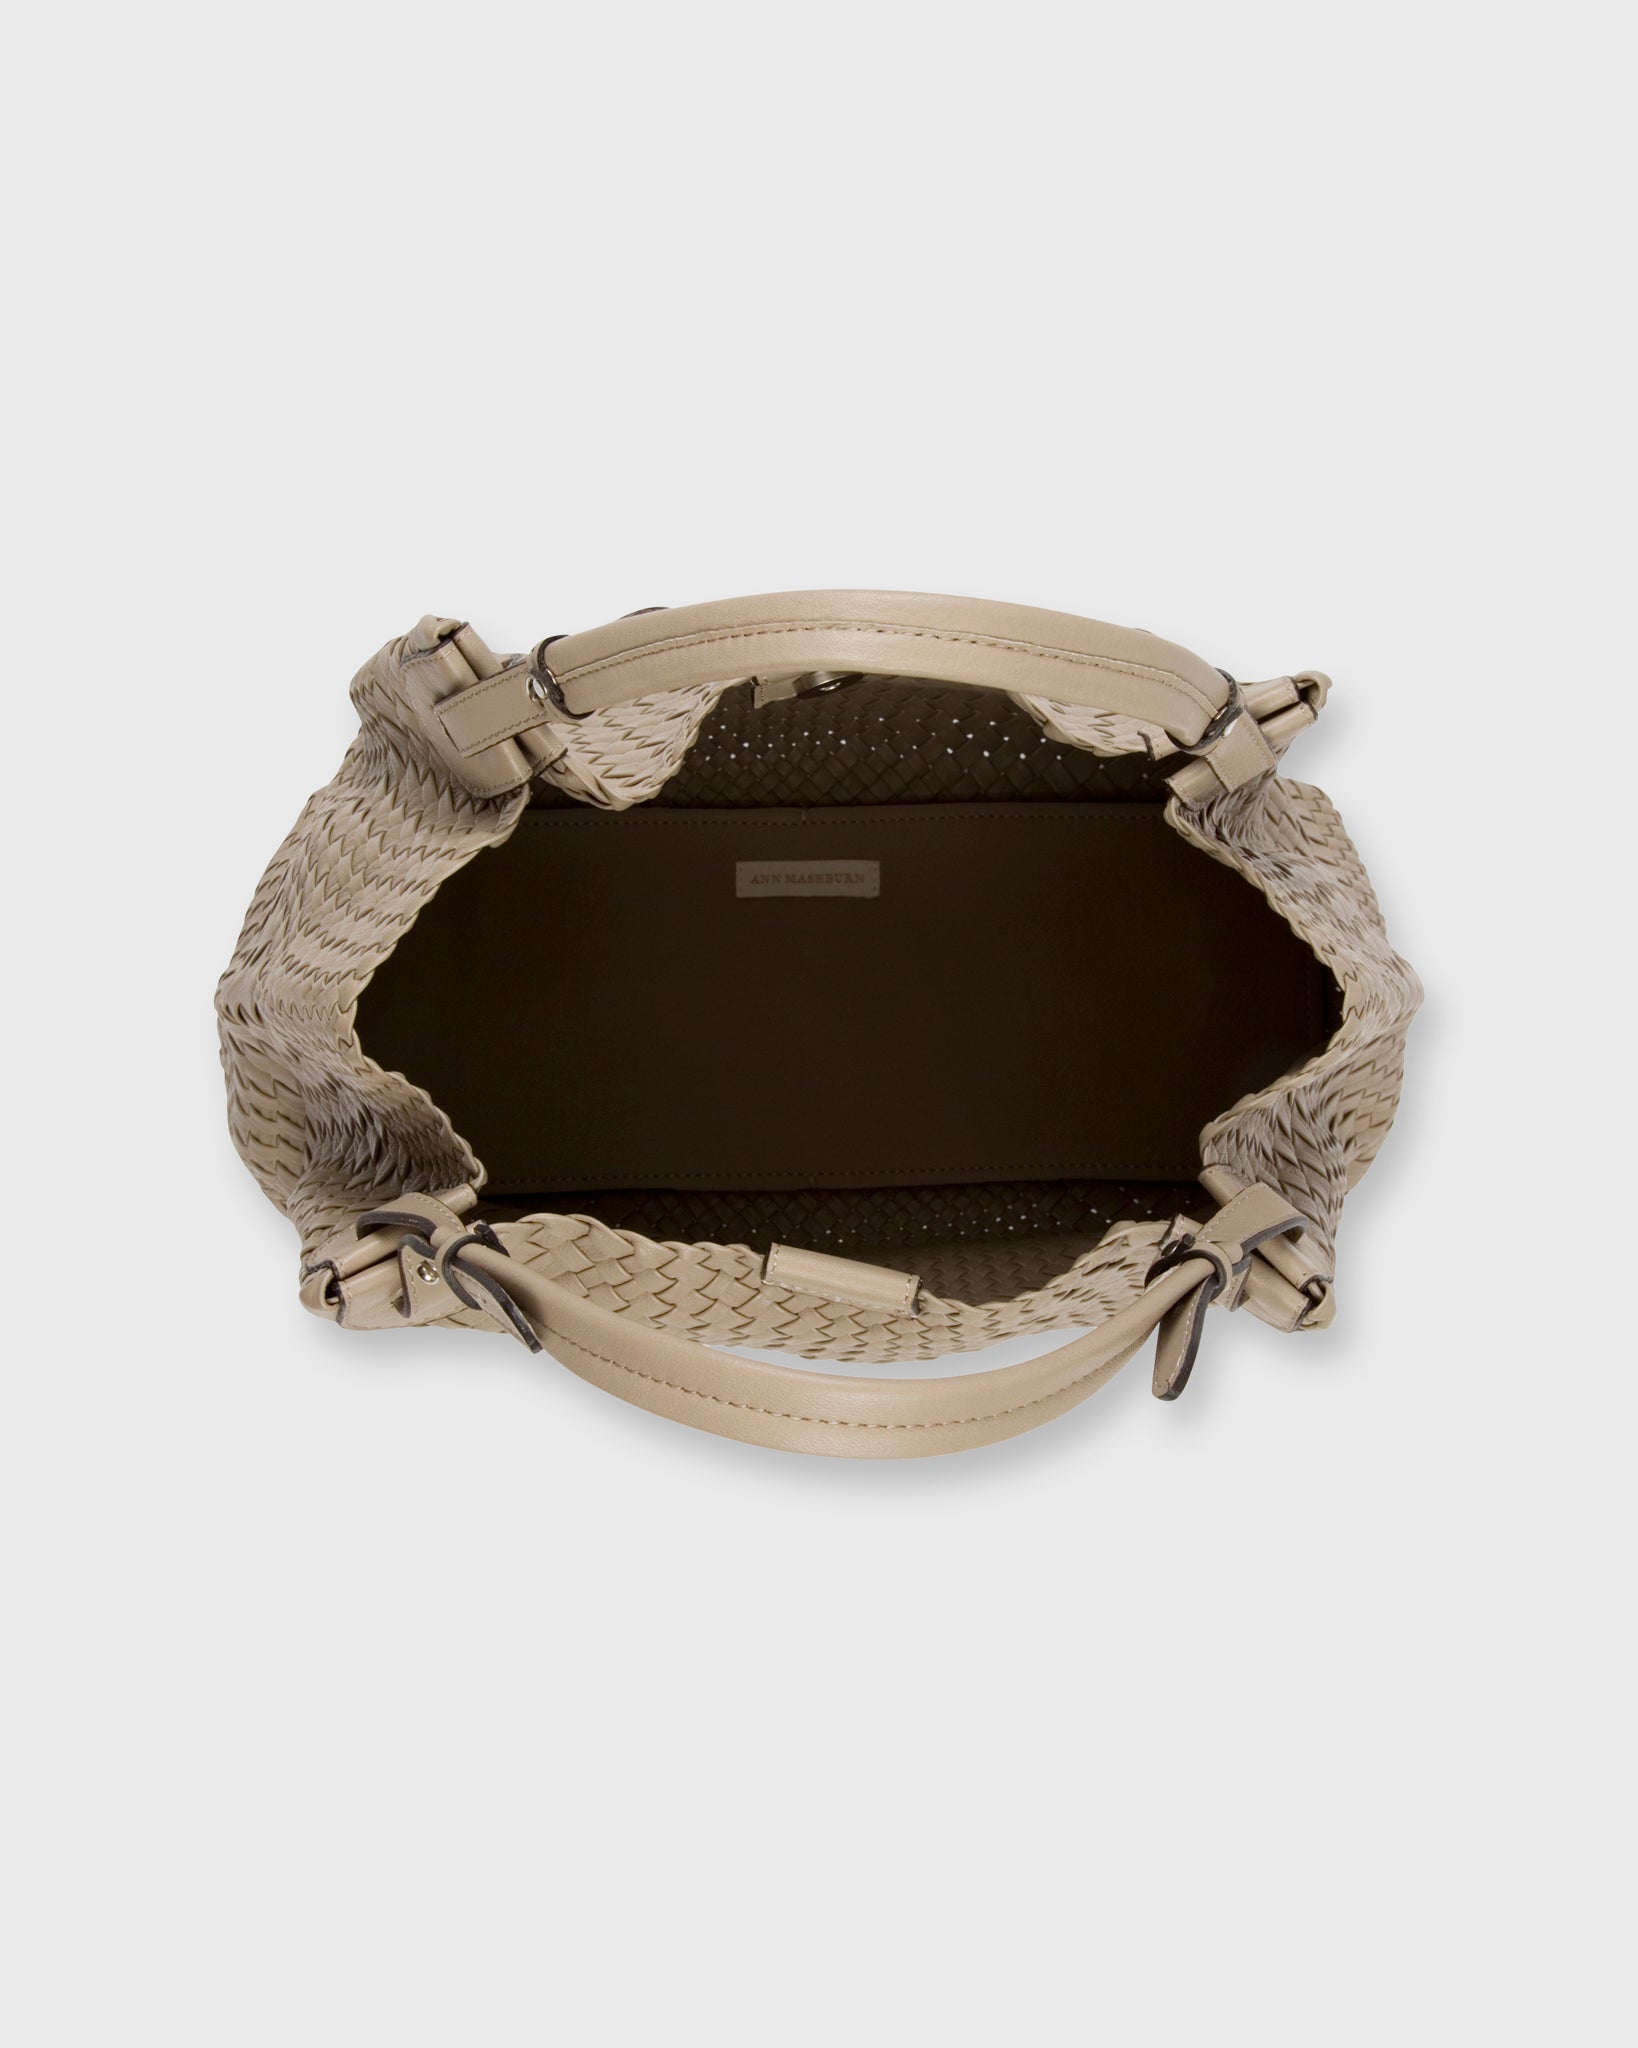 Cate Handwoven Satchel Bag in Beige Leather